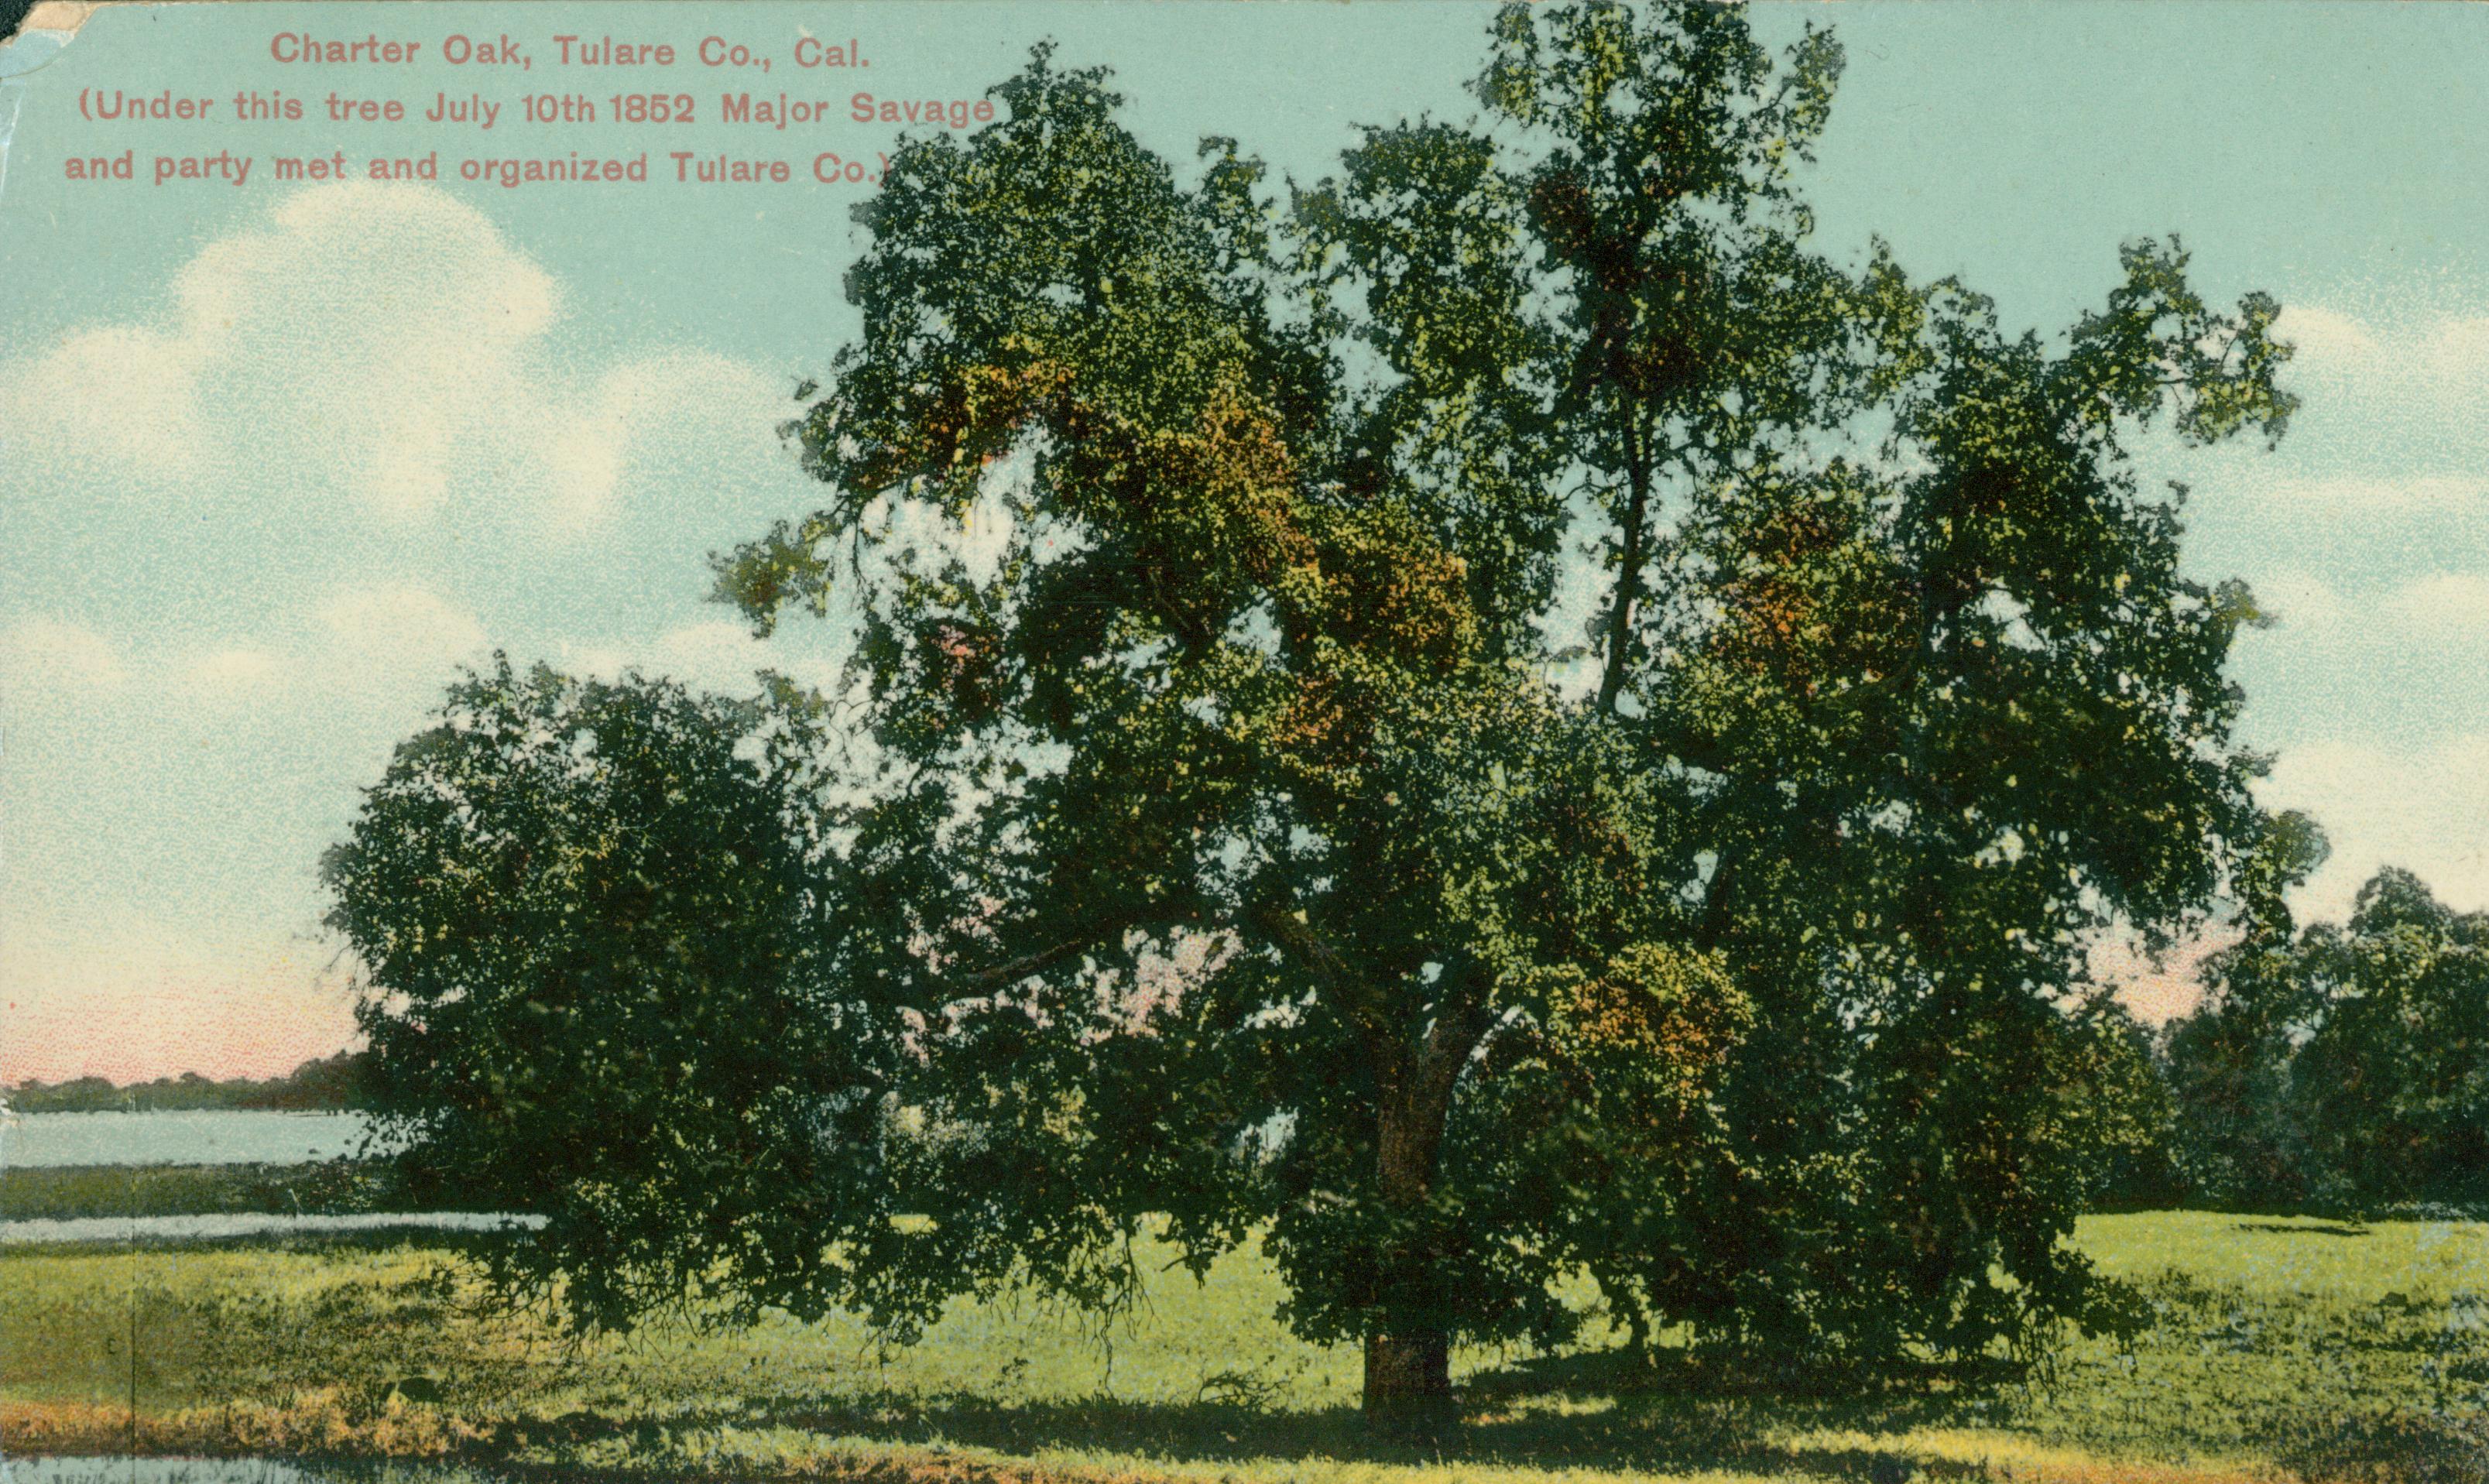 Shows a large oak tree in a meadow